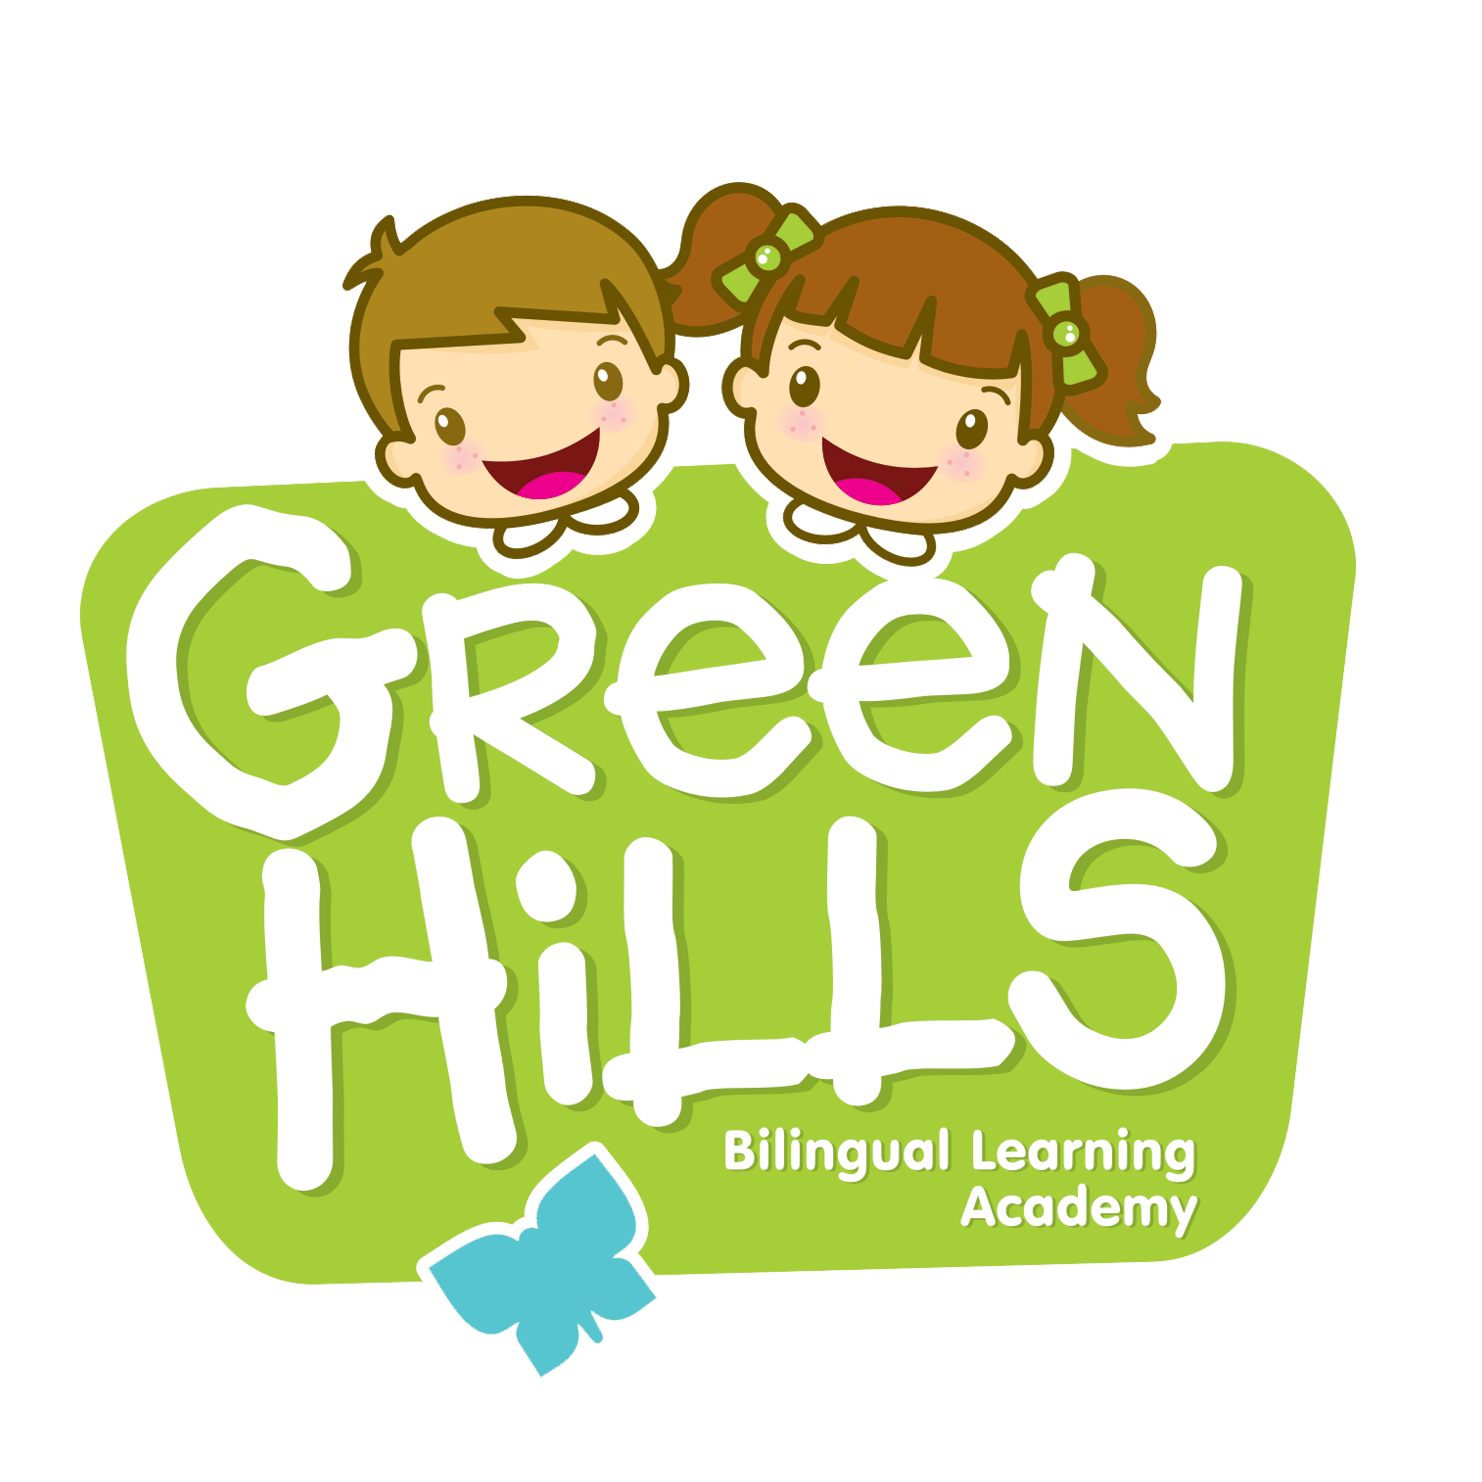 Green Hills Bilingual Learning Academy